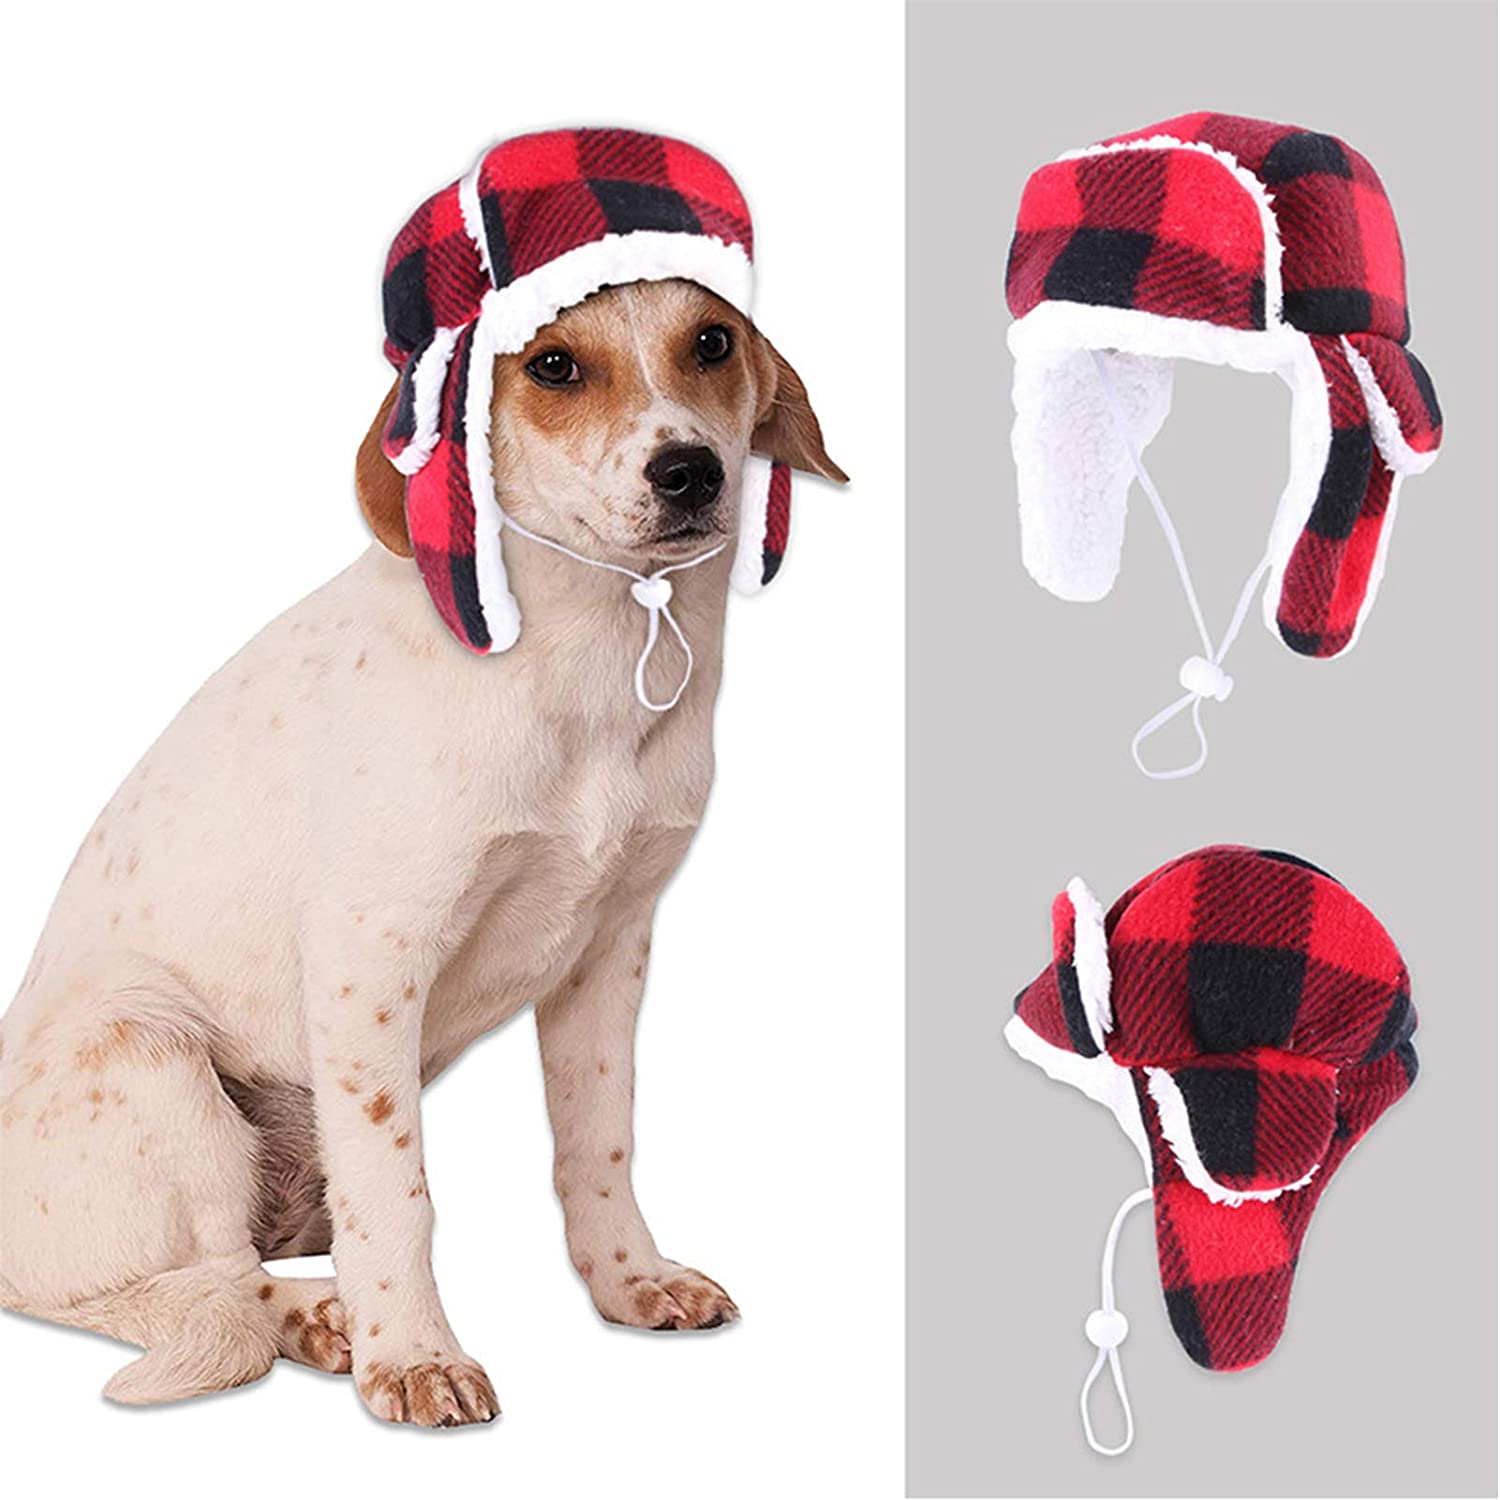 SEIS Christmas Dog Trooper Hat with Earmuffs Winter Adjustable Pet Ushanka Red Plaid Pet Cap Xmas Dog Headwear for Small Medium Large Dogs